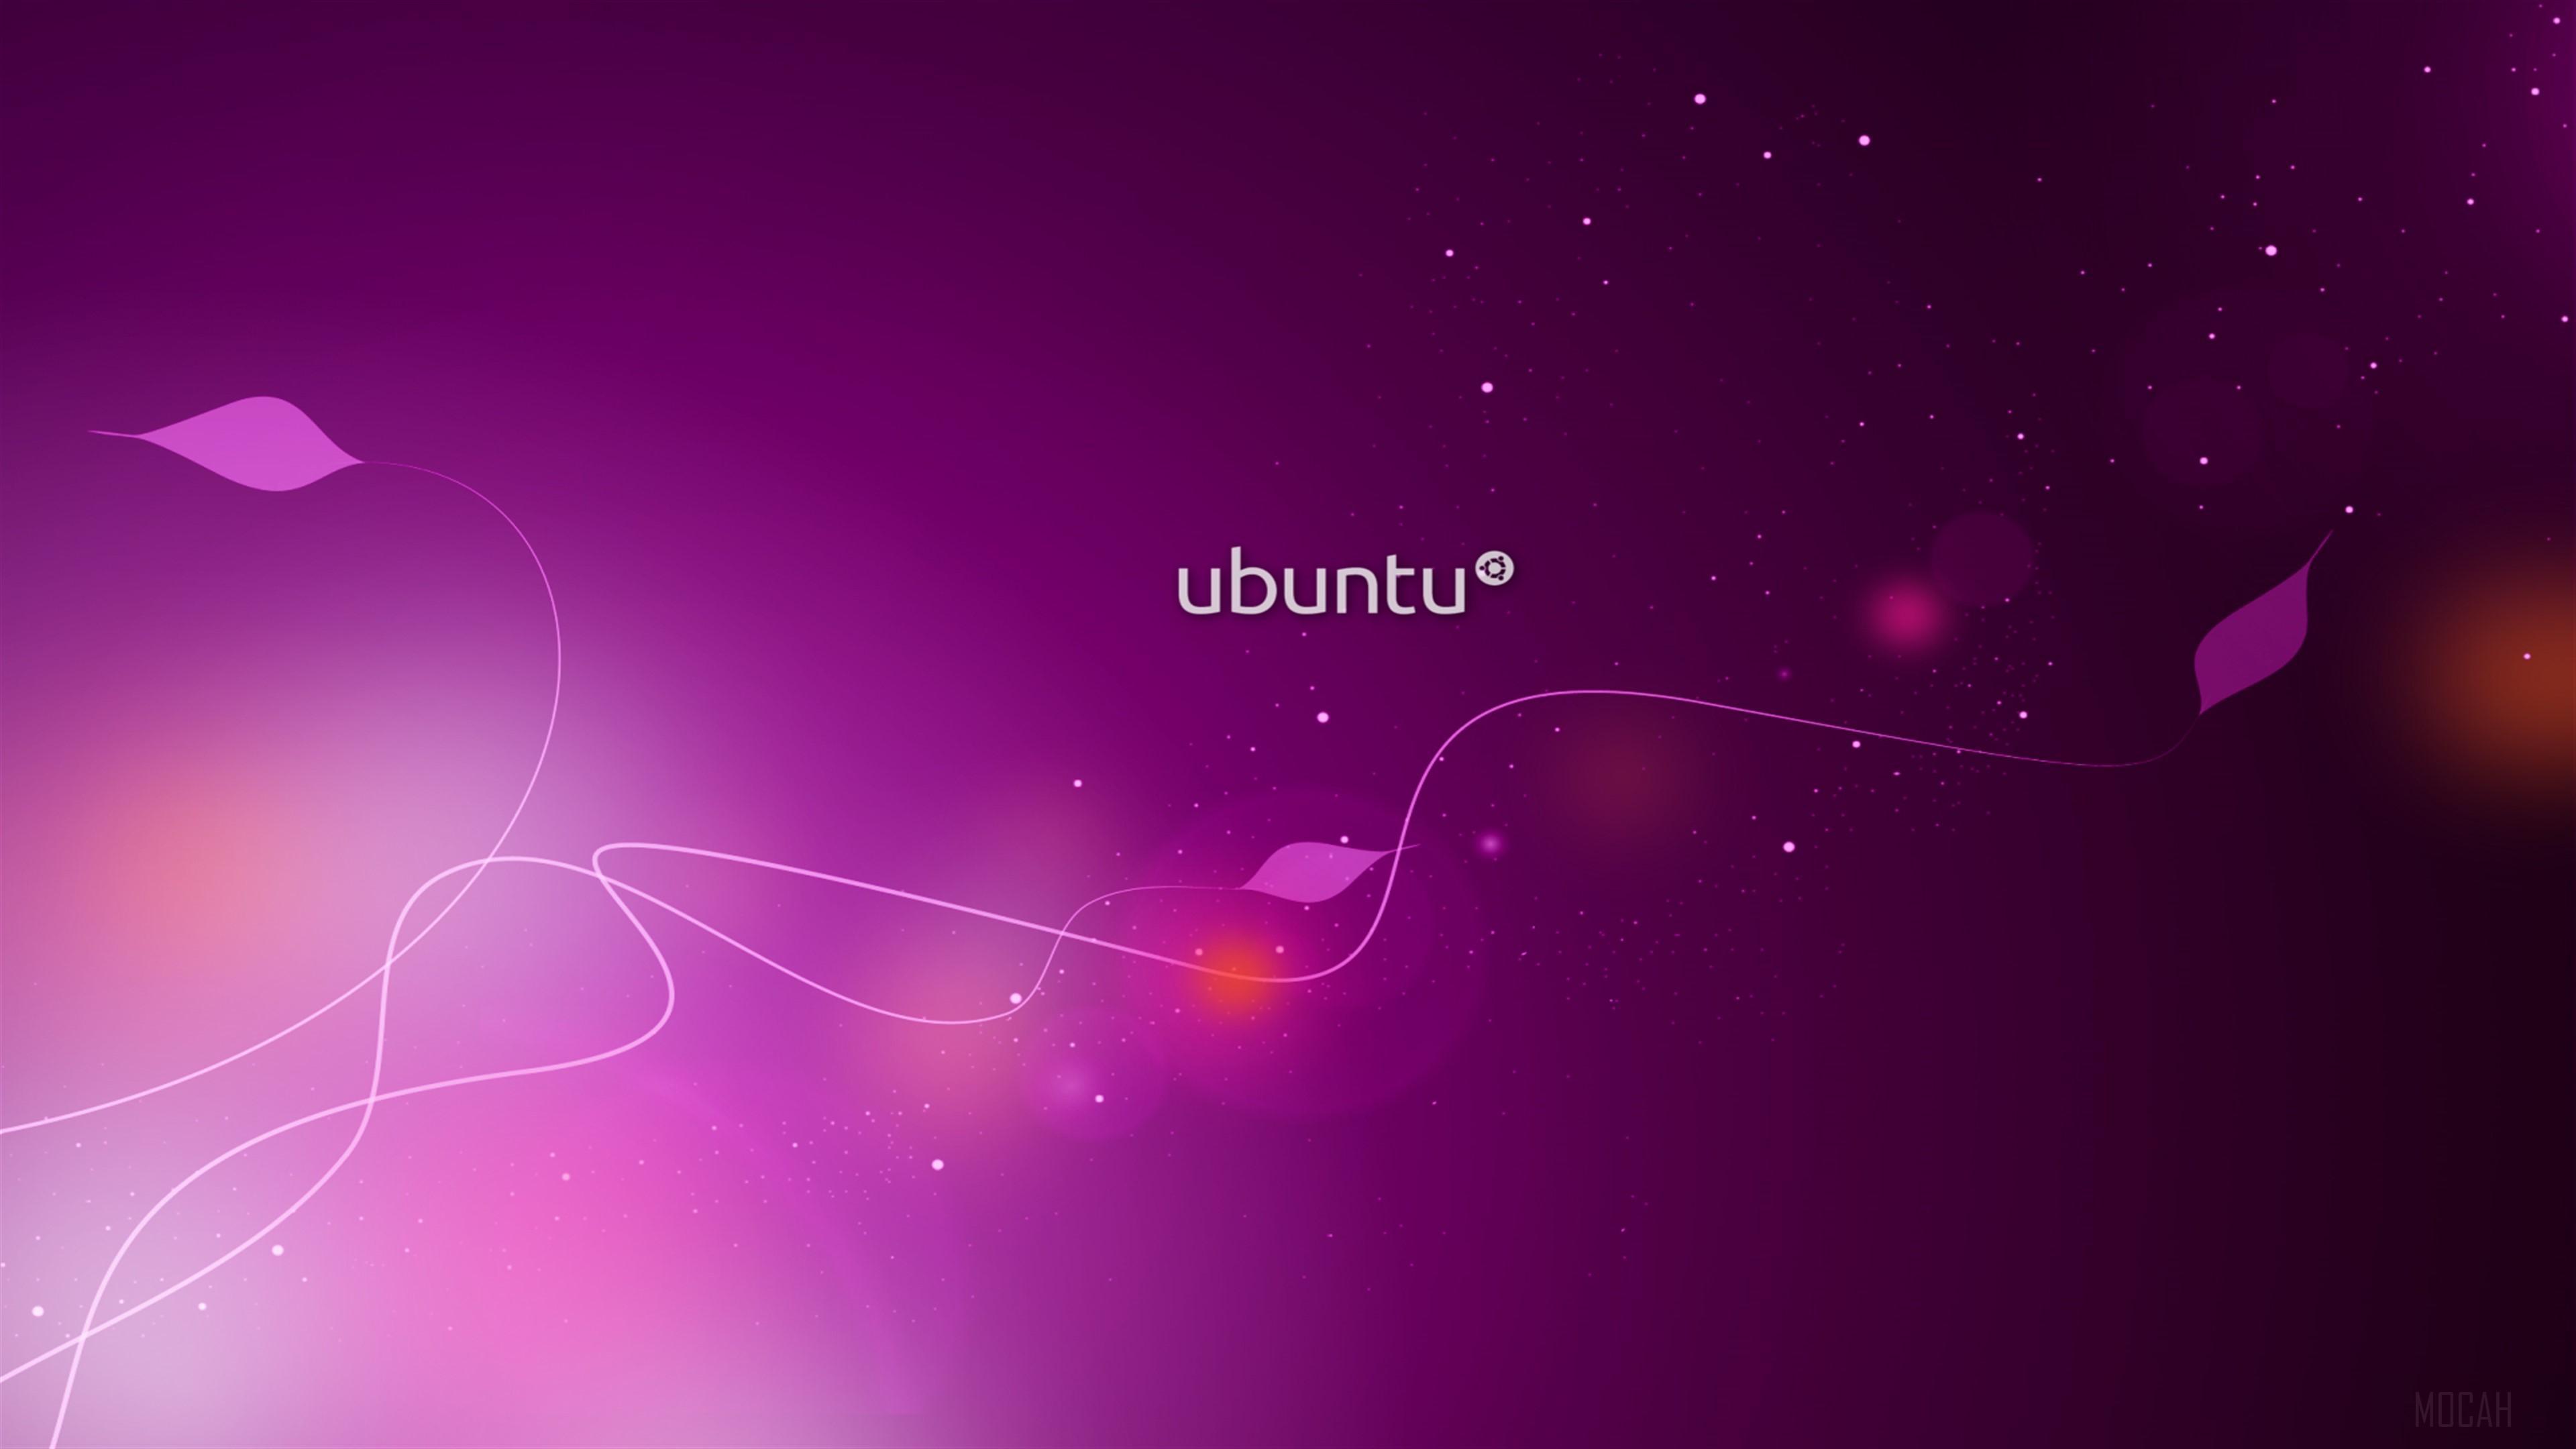 HD wallpaper, Ubuntu Purple 4K